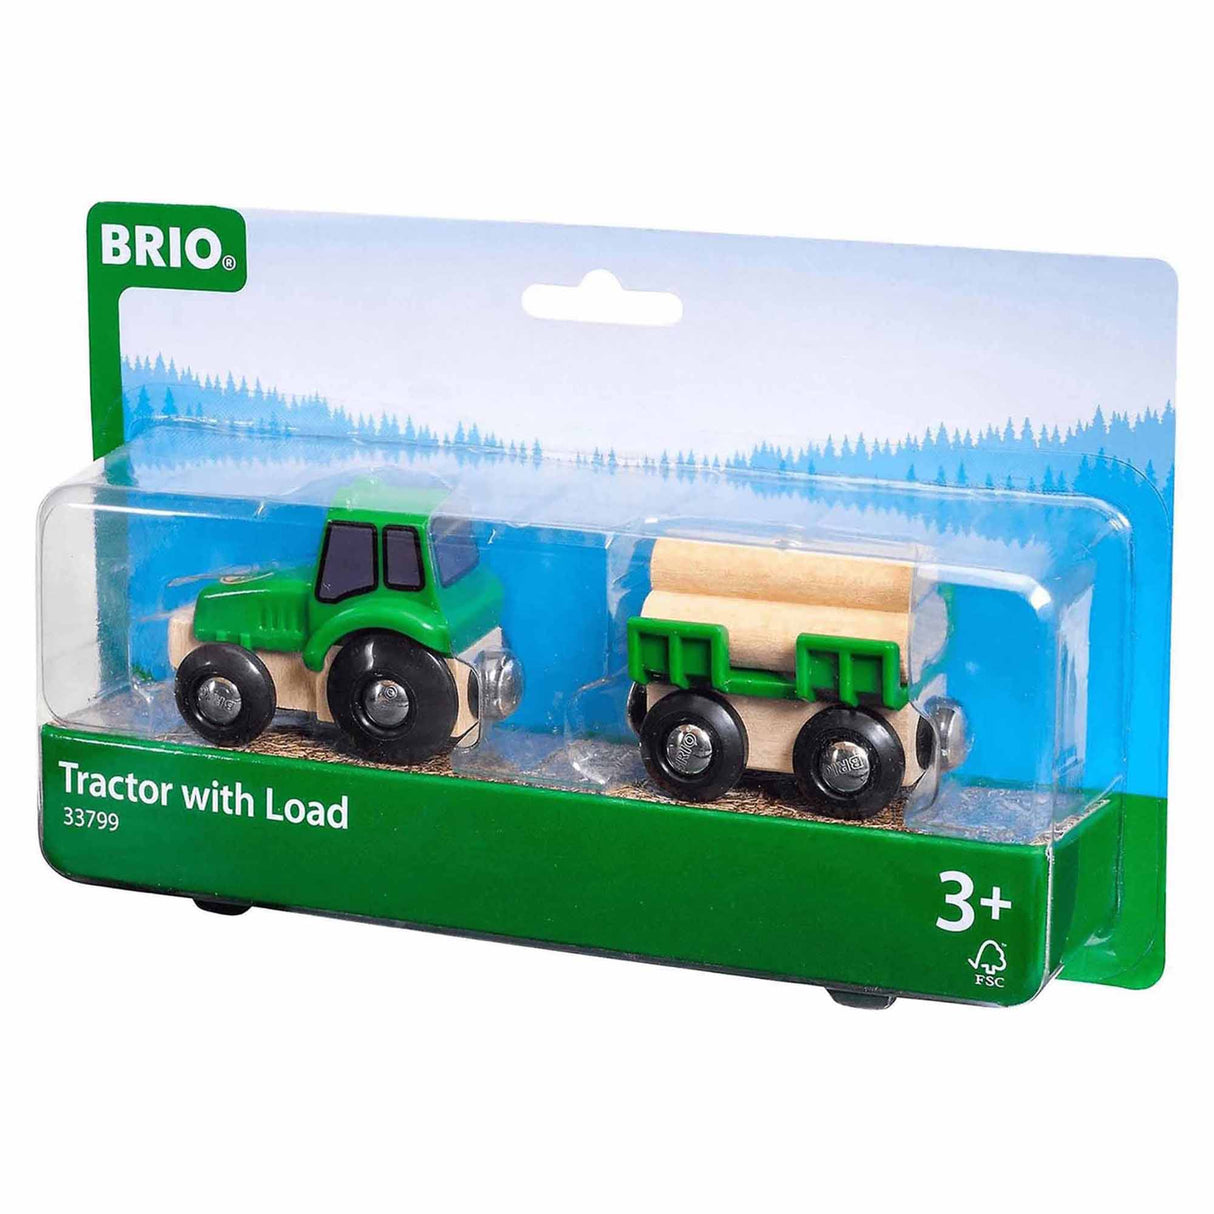 BRIO 33799 Tractor with Load